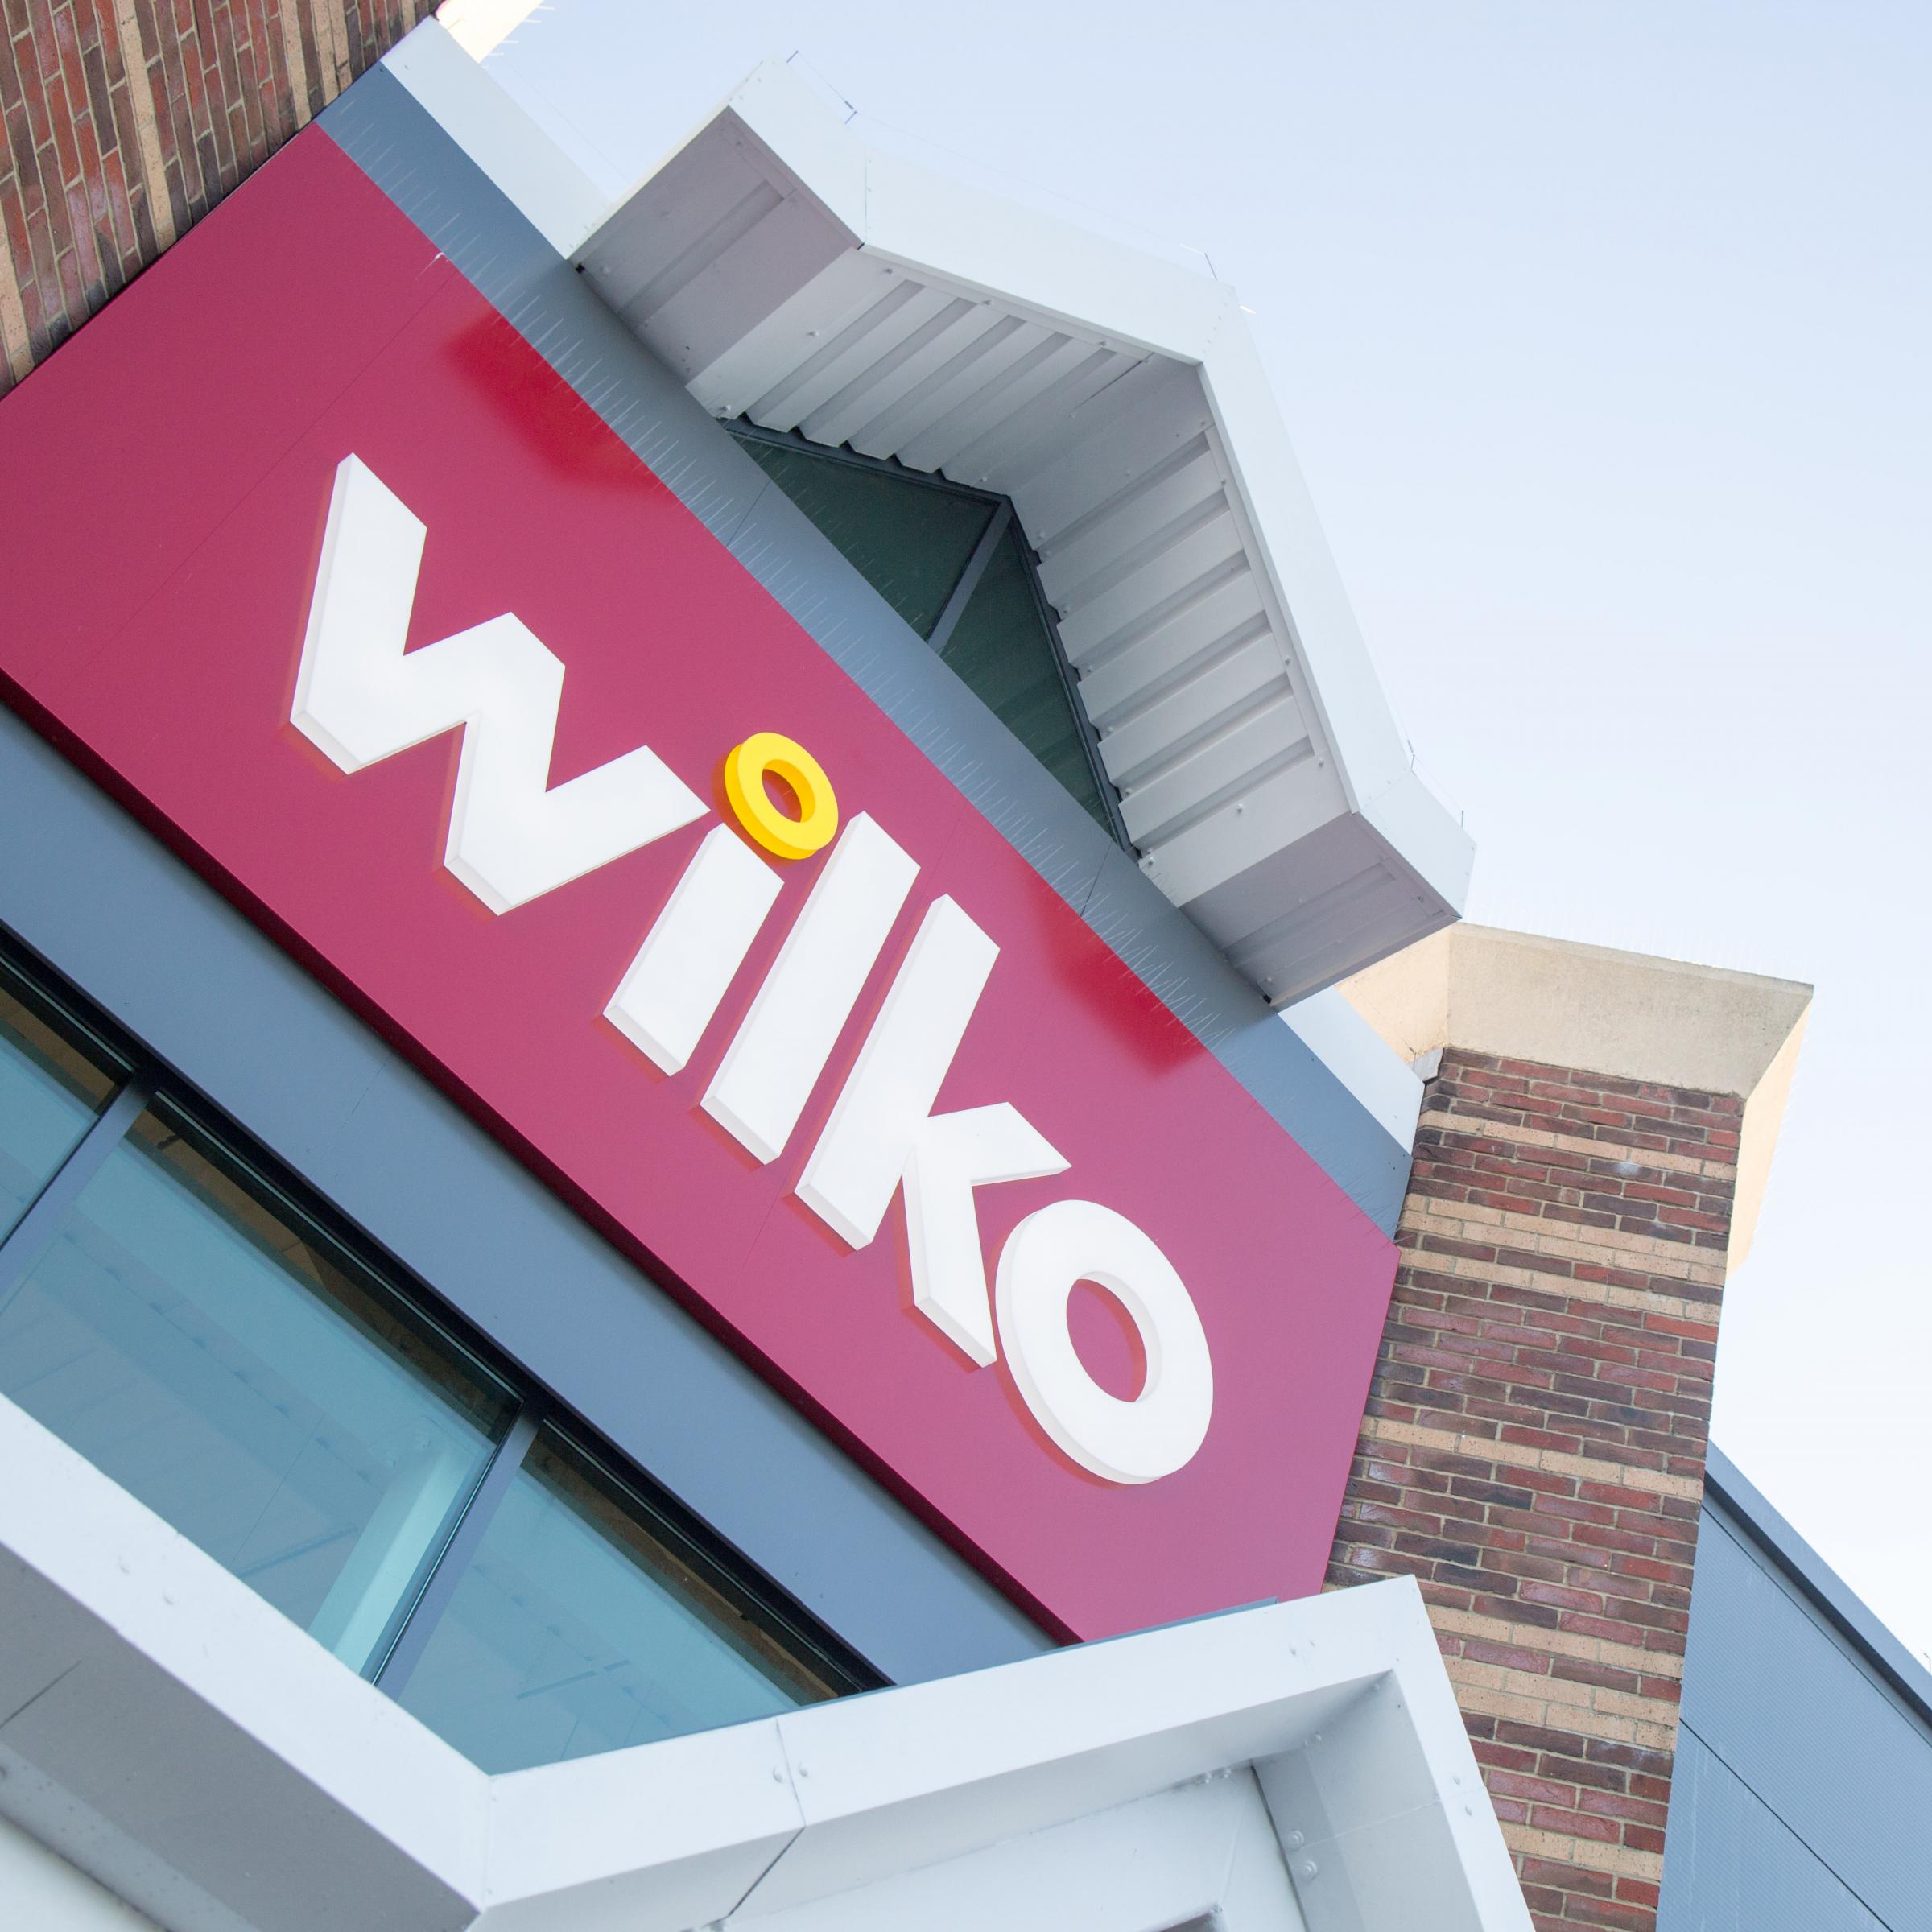 Wilko to open new store in New Malden high street